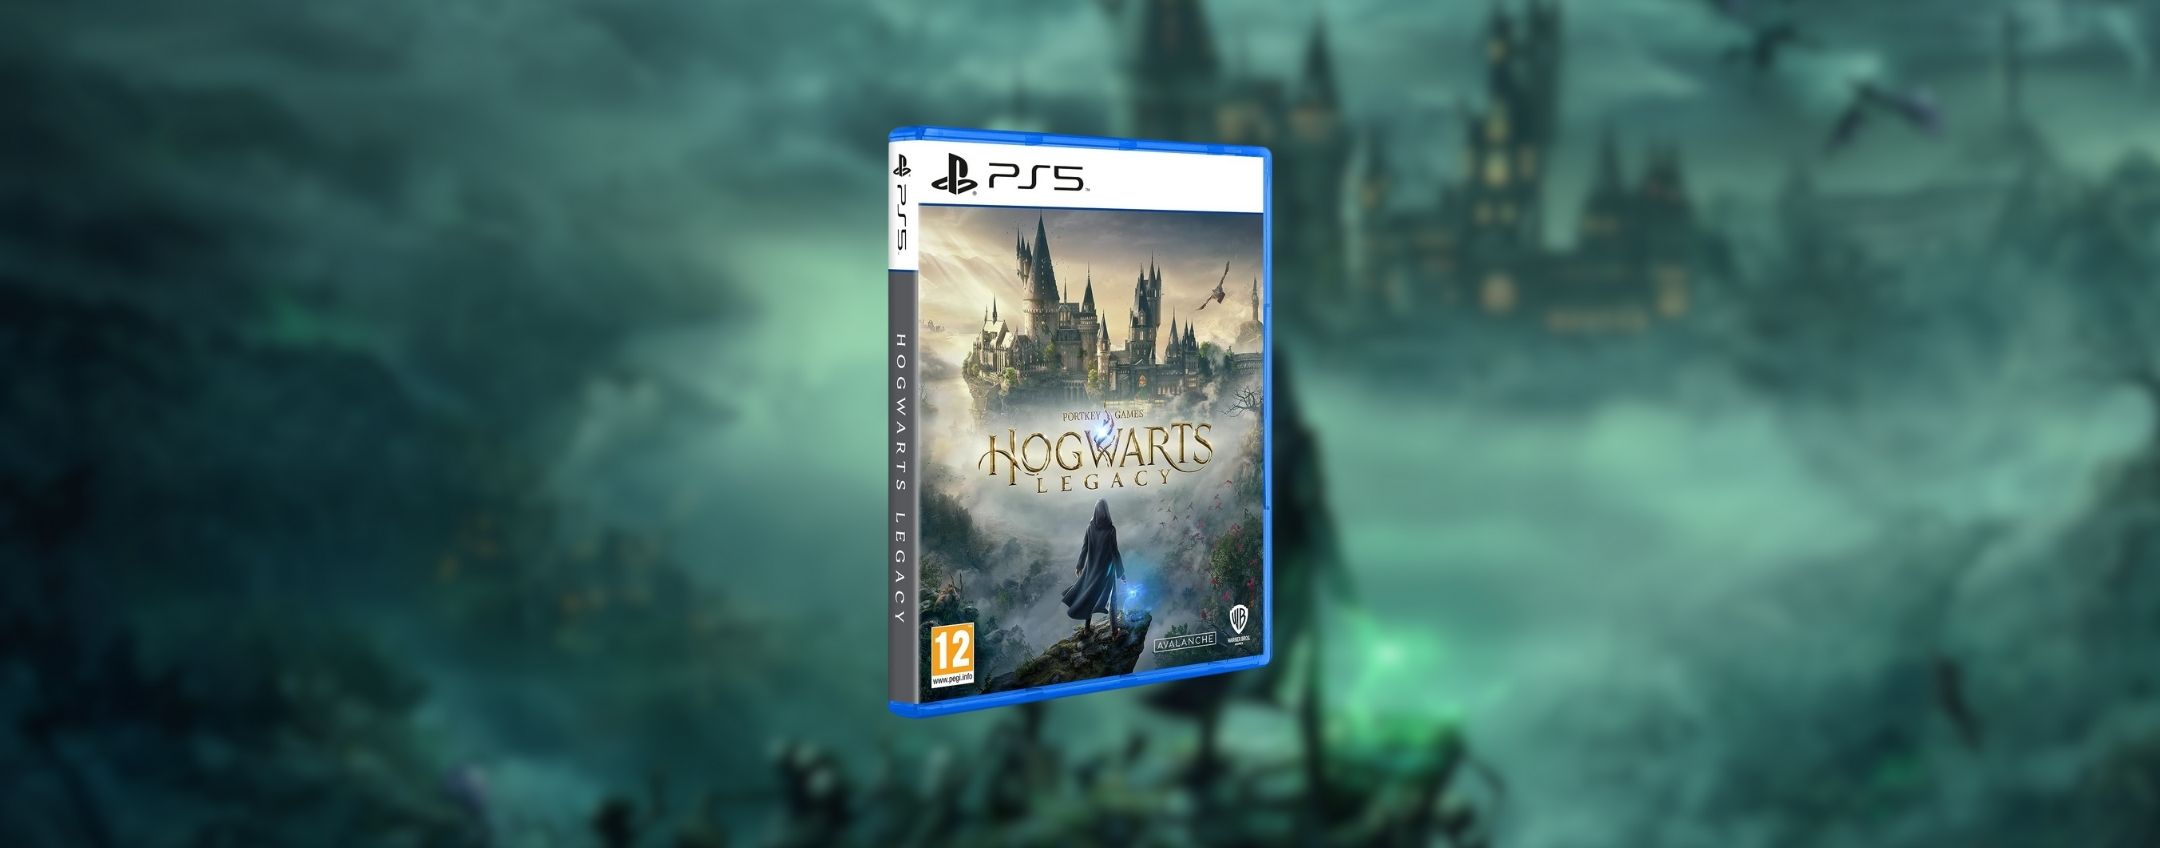 Hogwarts Legacy PS5 a MENO DI 40€: acquistalo in super offerta! - Melablog